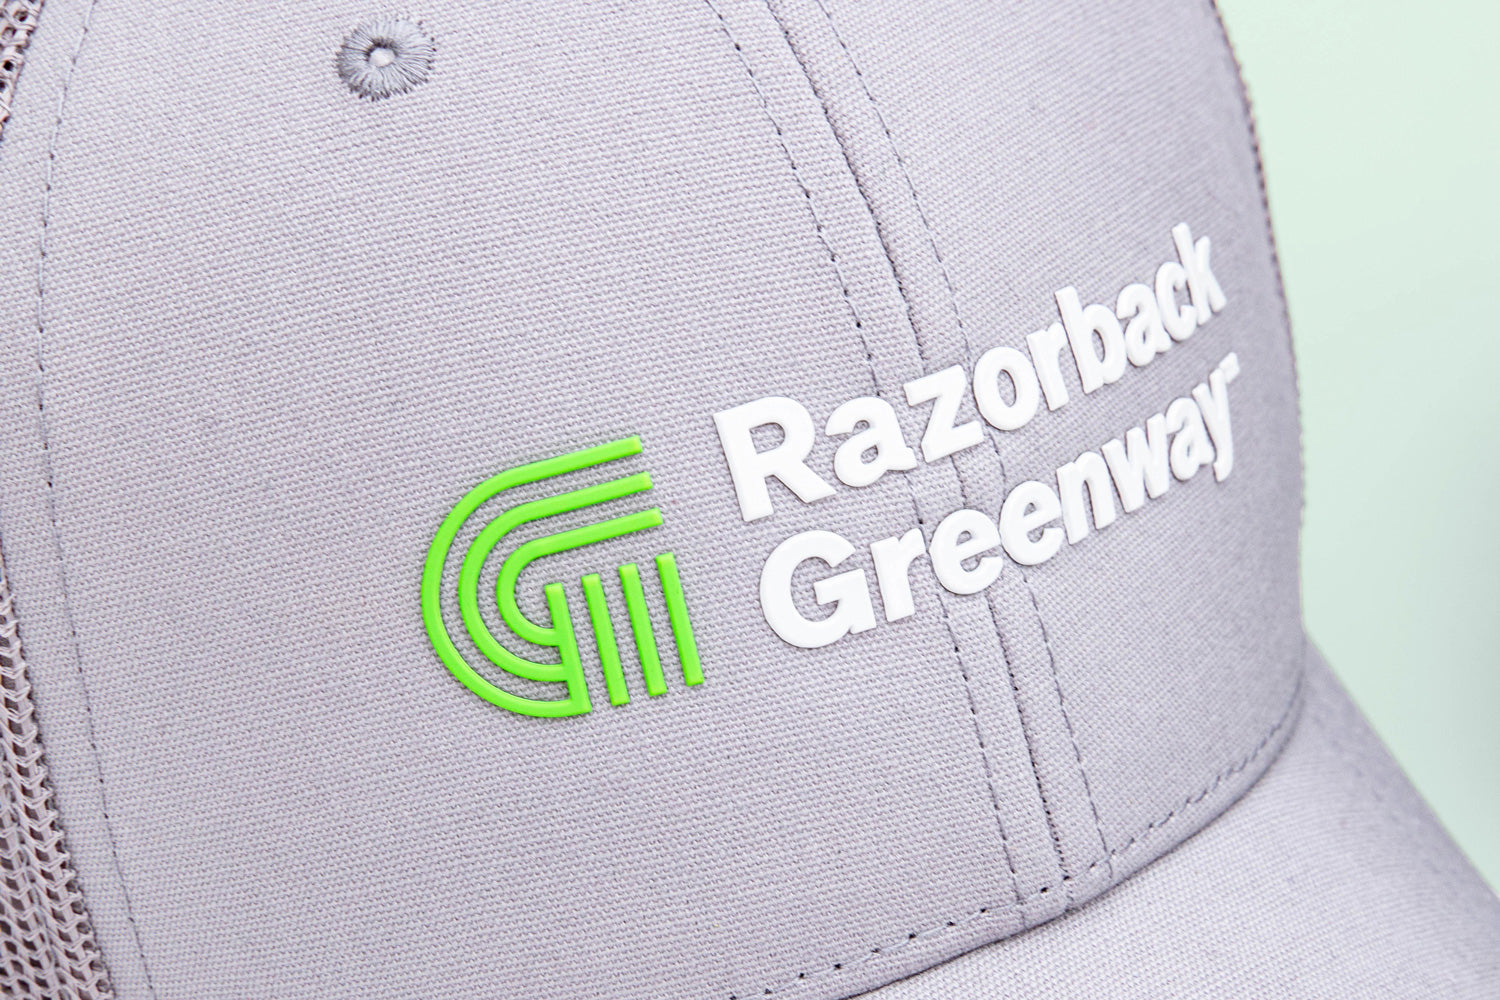 Razorback Greenway Mesh Back Cap